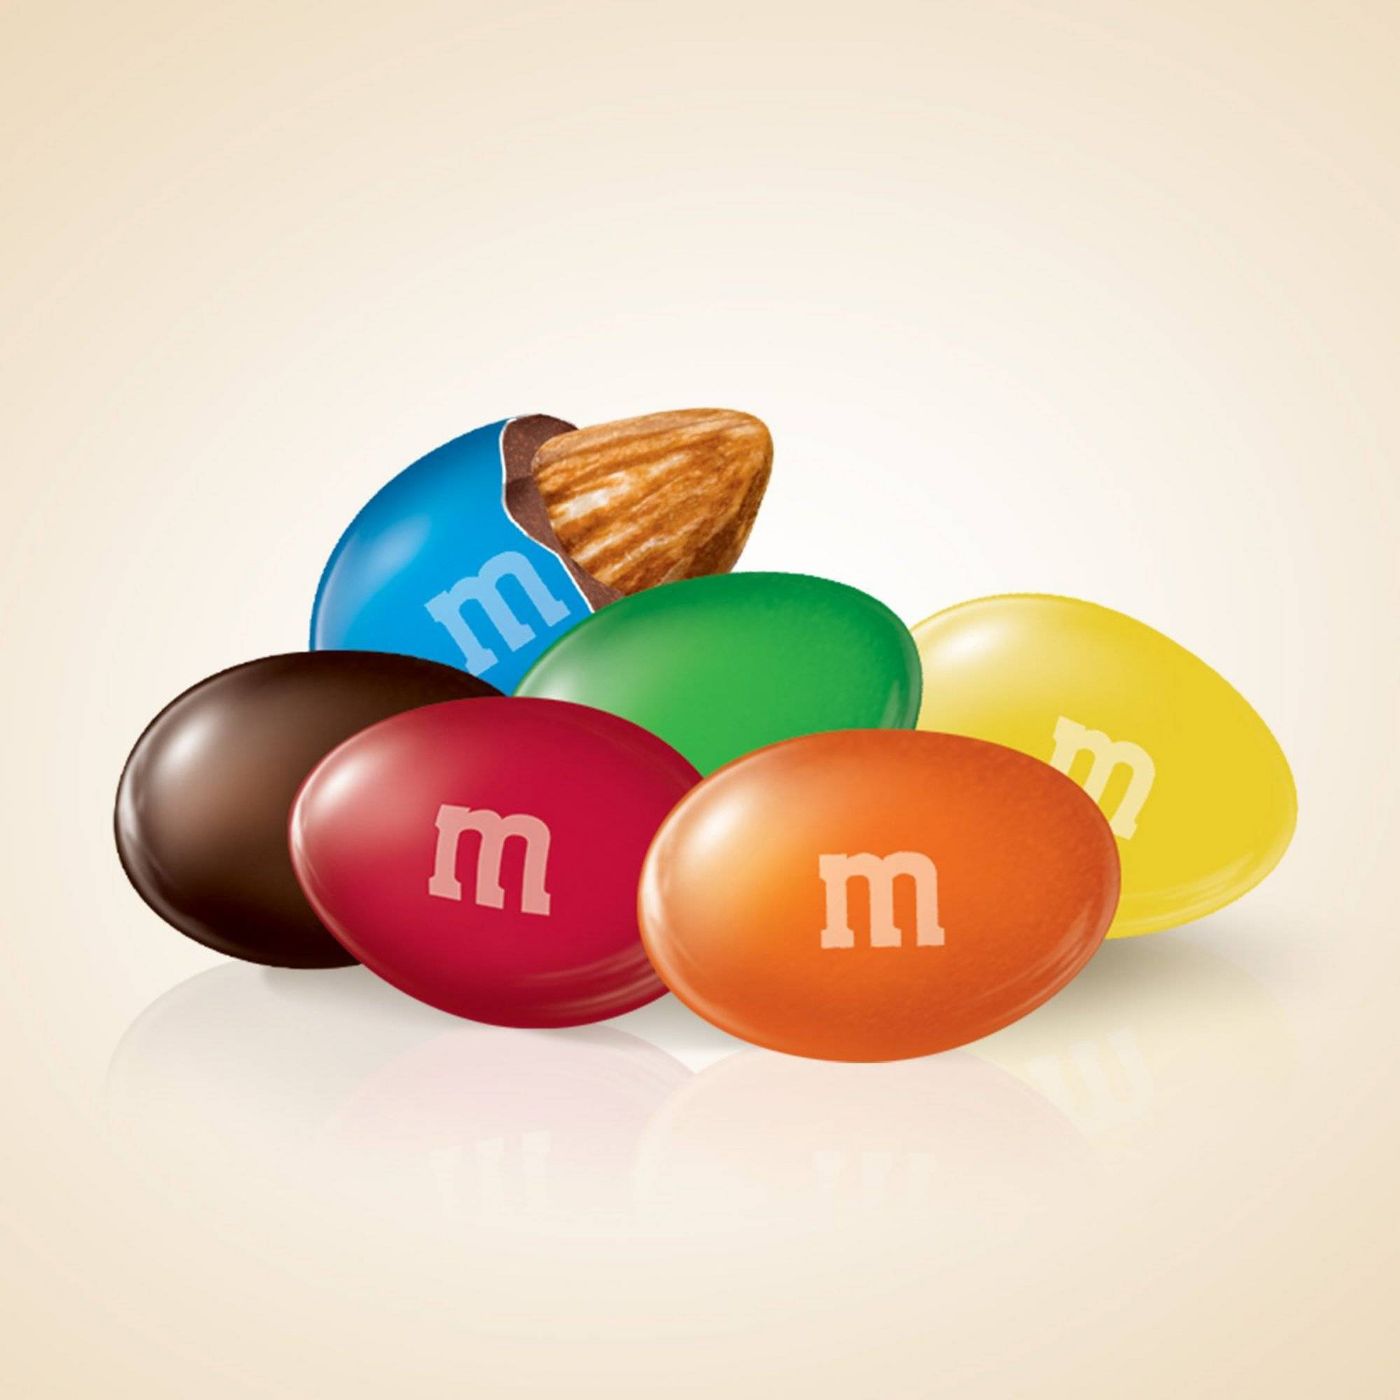 M&M's Almond Chocolate Candies, Sharing Size, 9.3oz